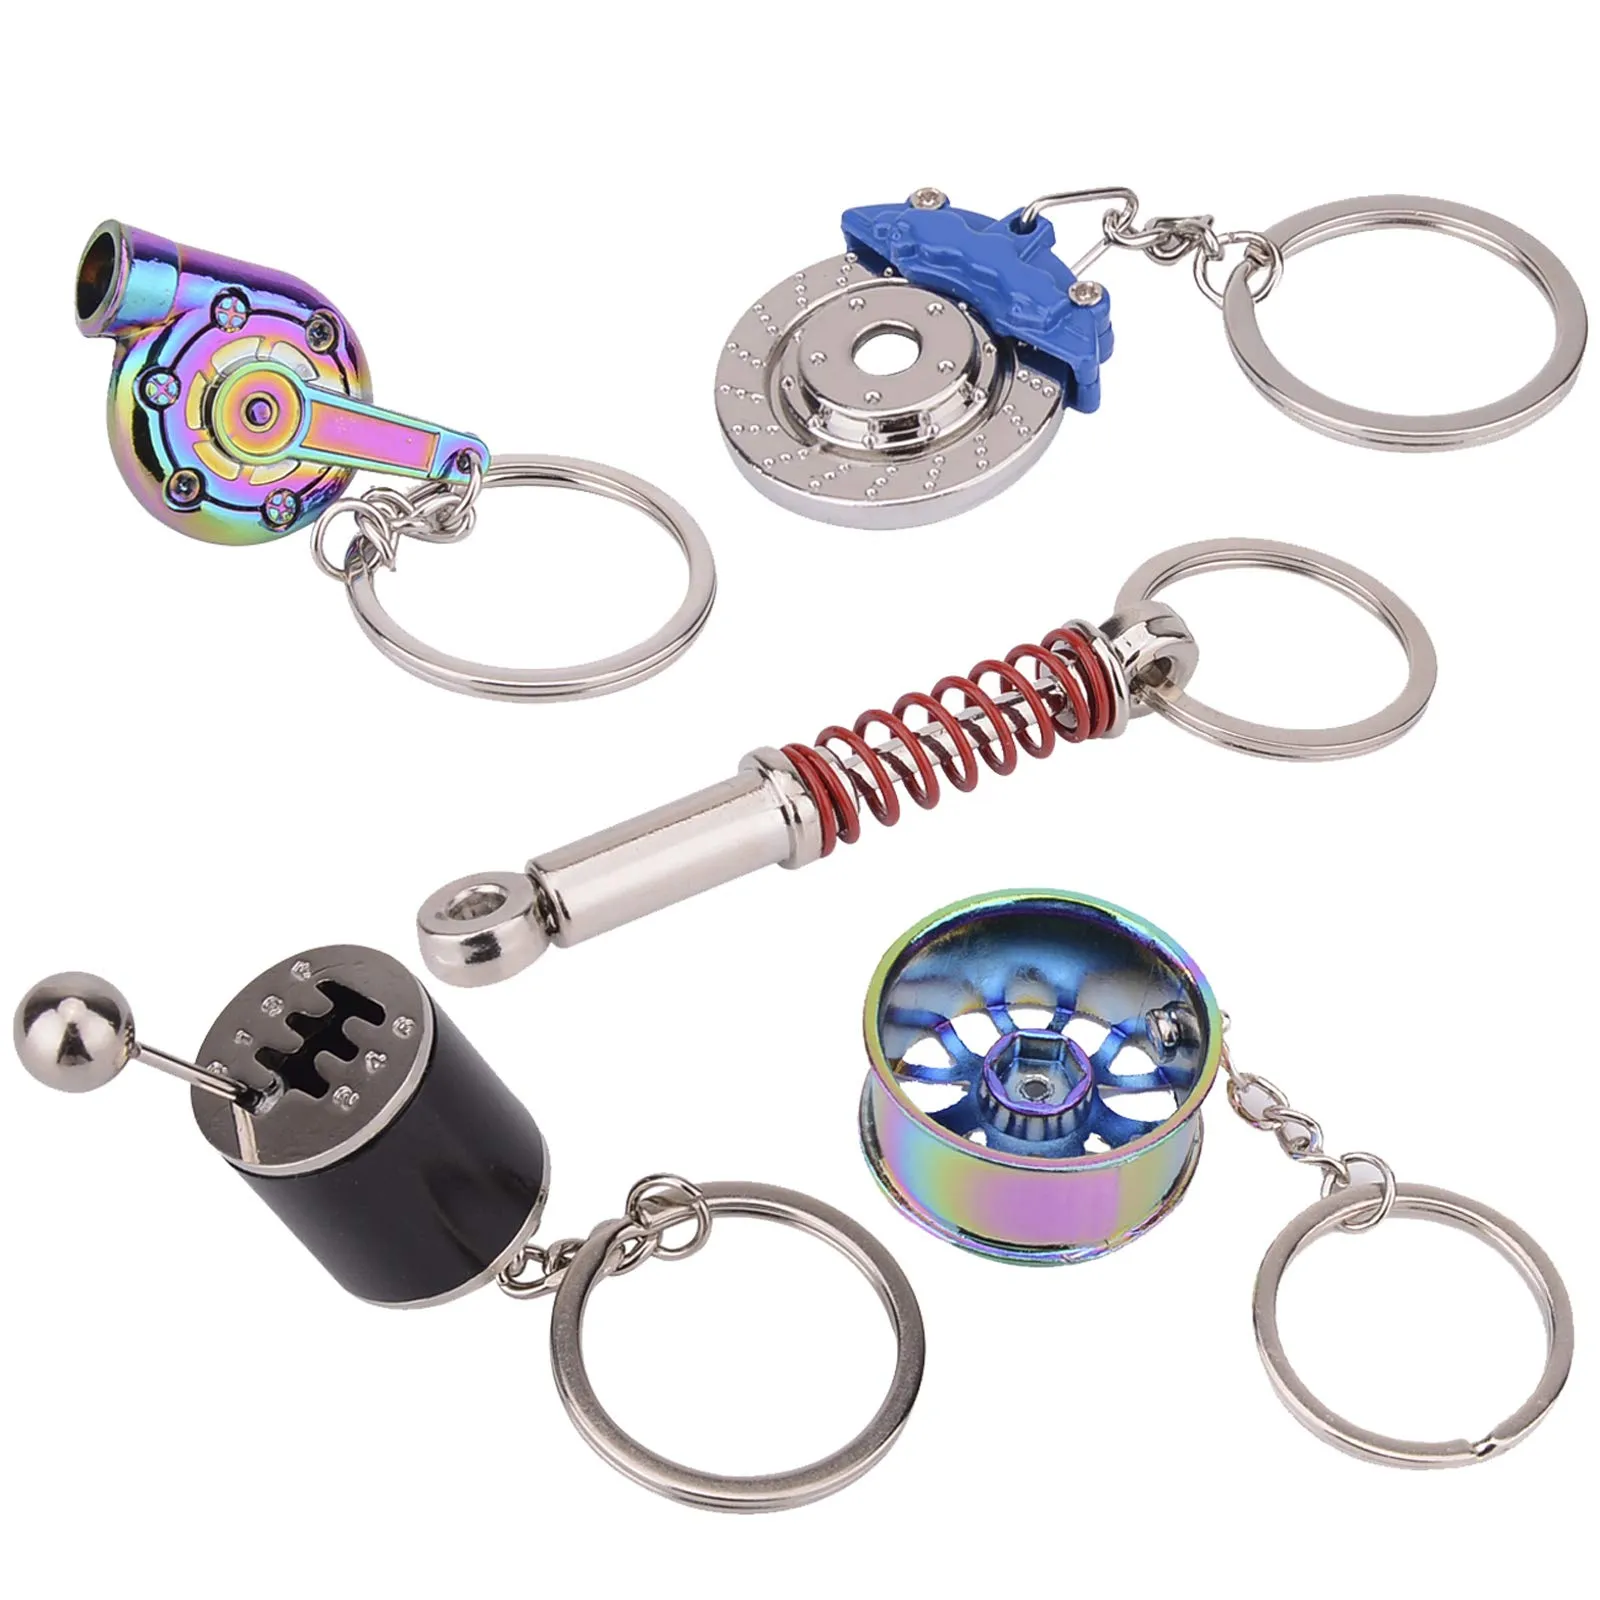 3ml mini wrench tool keychain metal spanner keyring pendant key holder organizer keyfob gift for men women multitool keychain tool keychains